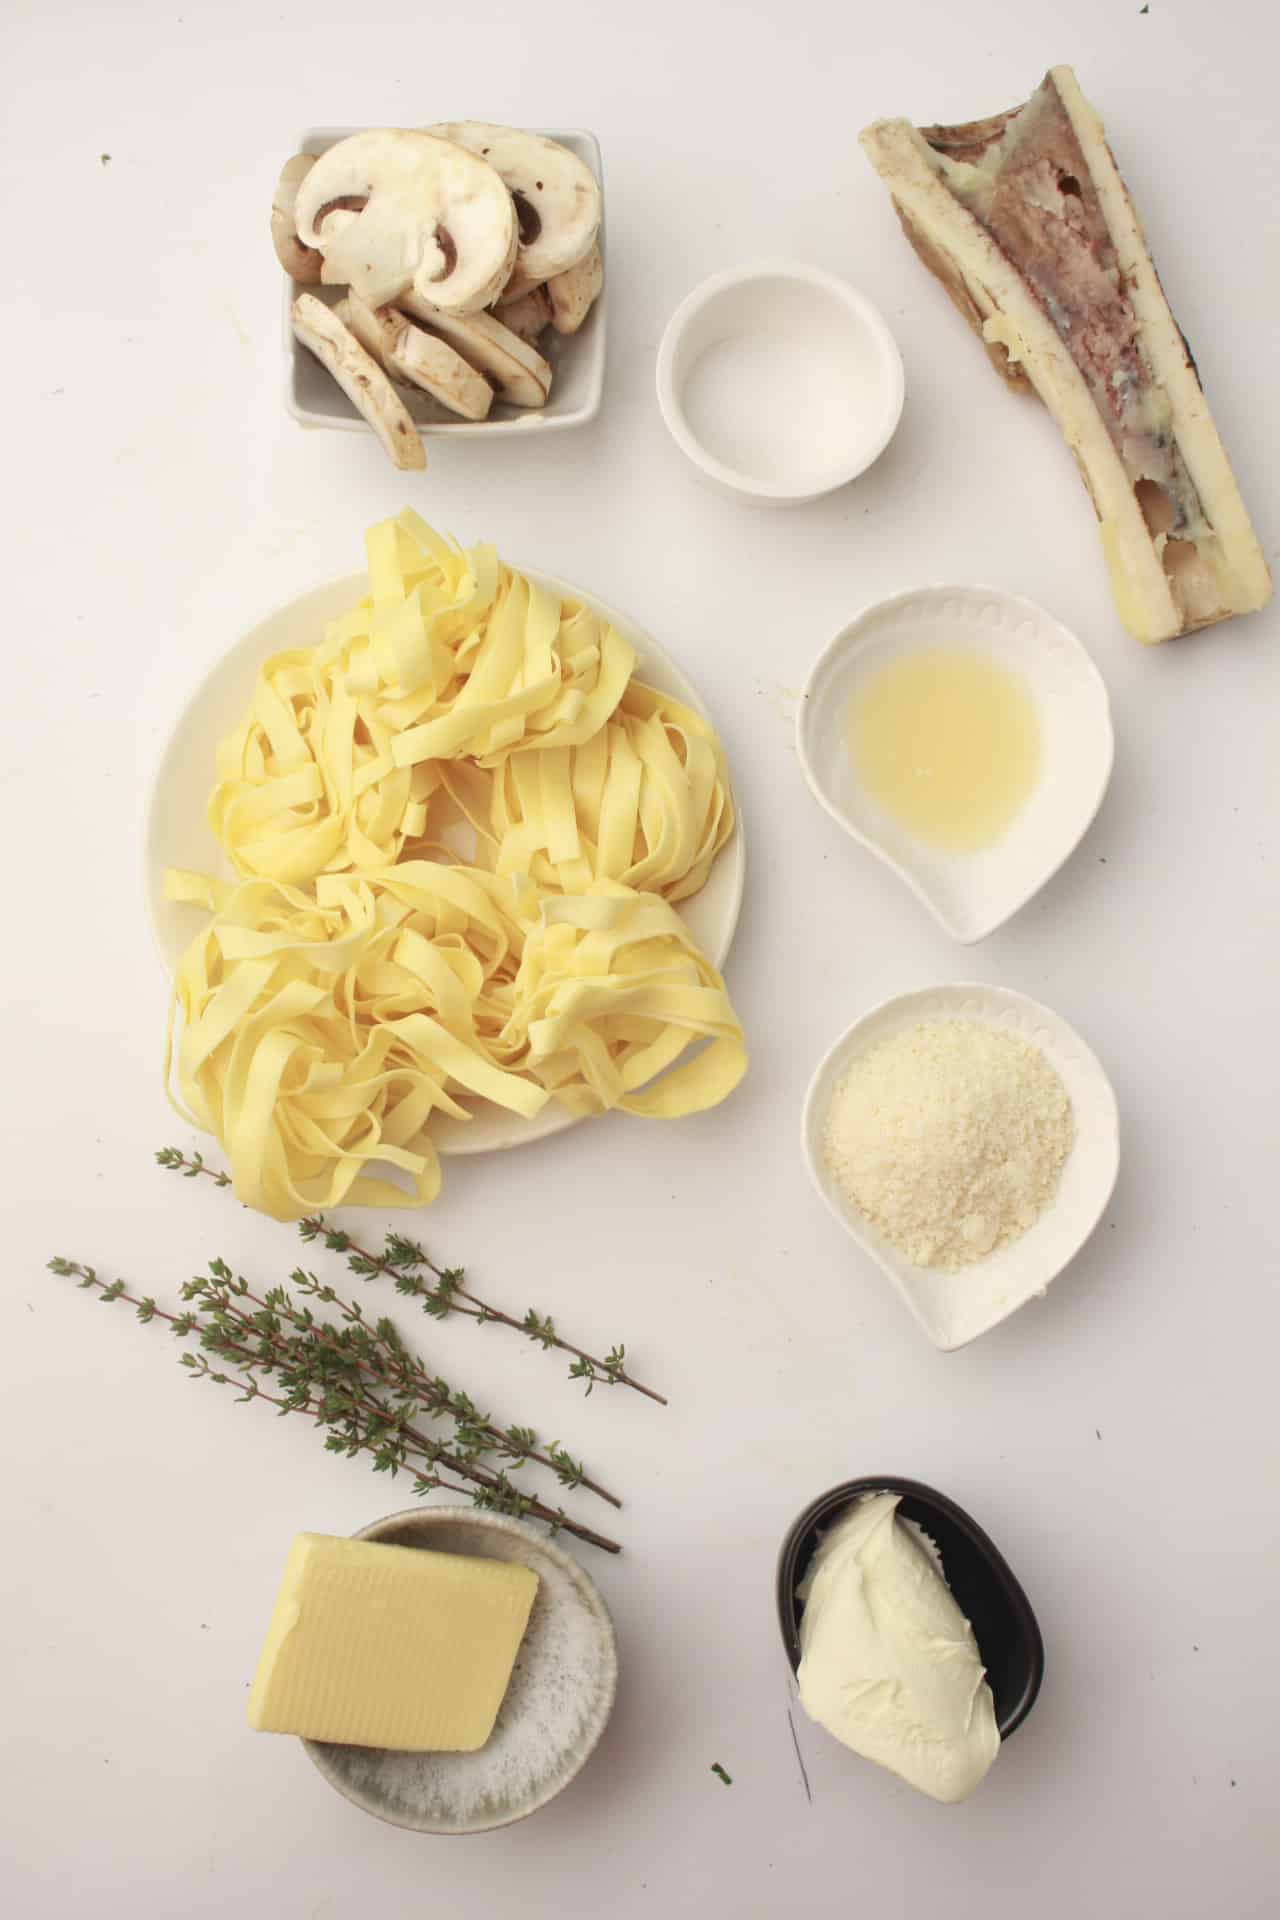 Bone Marrow Pasta
Ingredients 